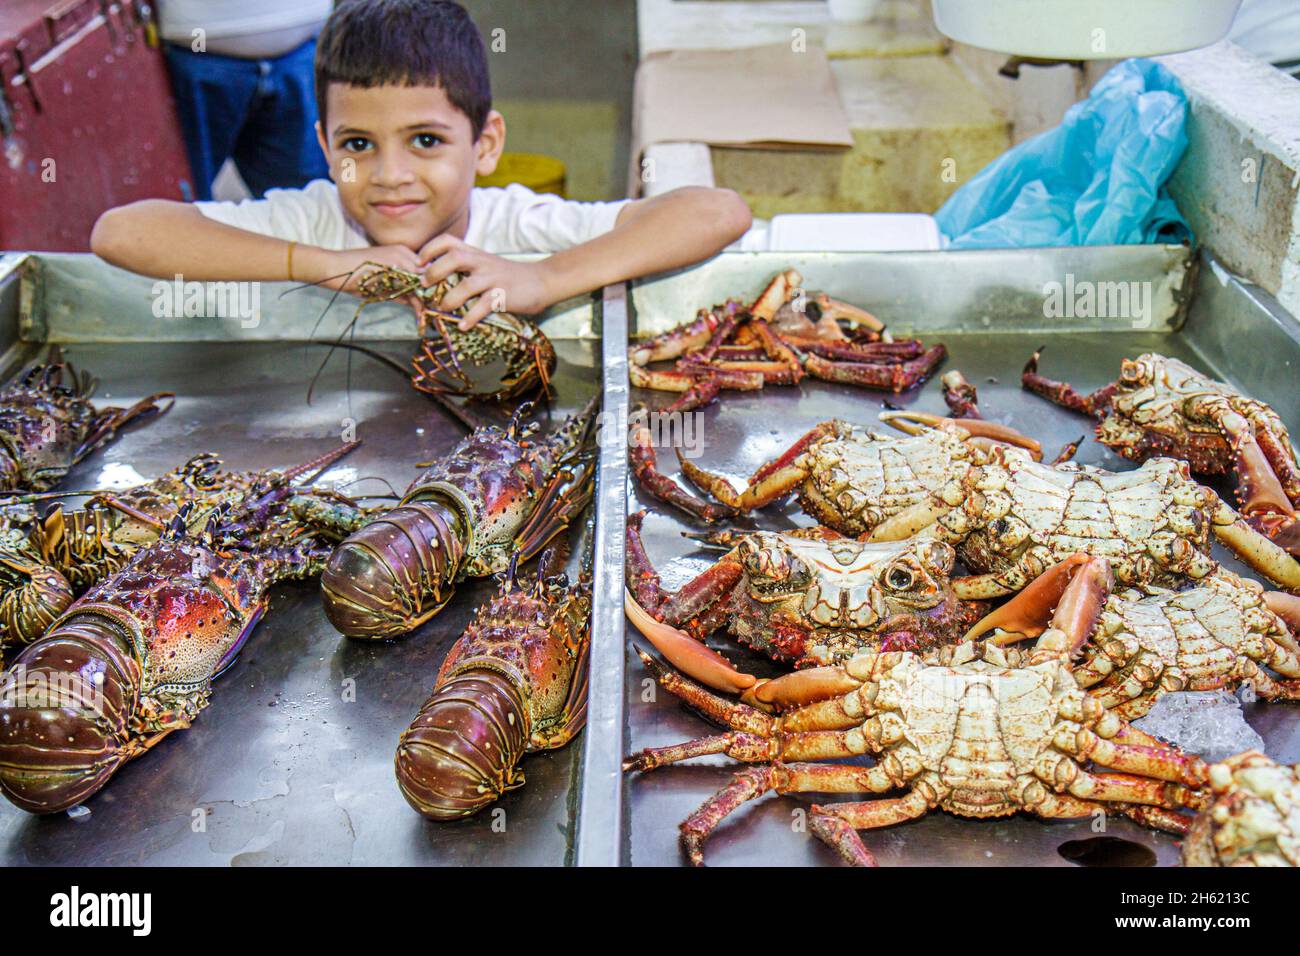 Panama City,Ancon,Mercado de Mariscos,market marketplace selling fresh,Hispanic boy seafood crabs lobsters display sale Stock Photo